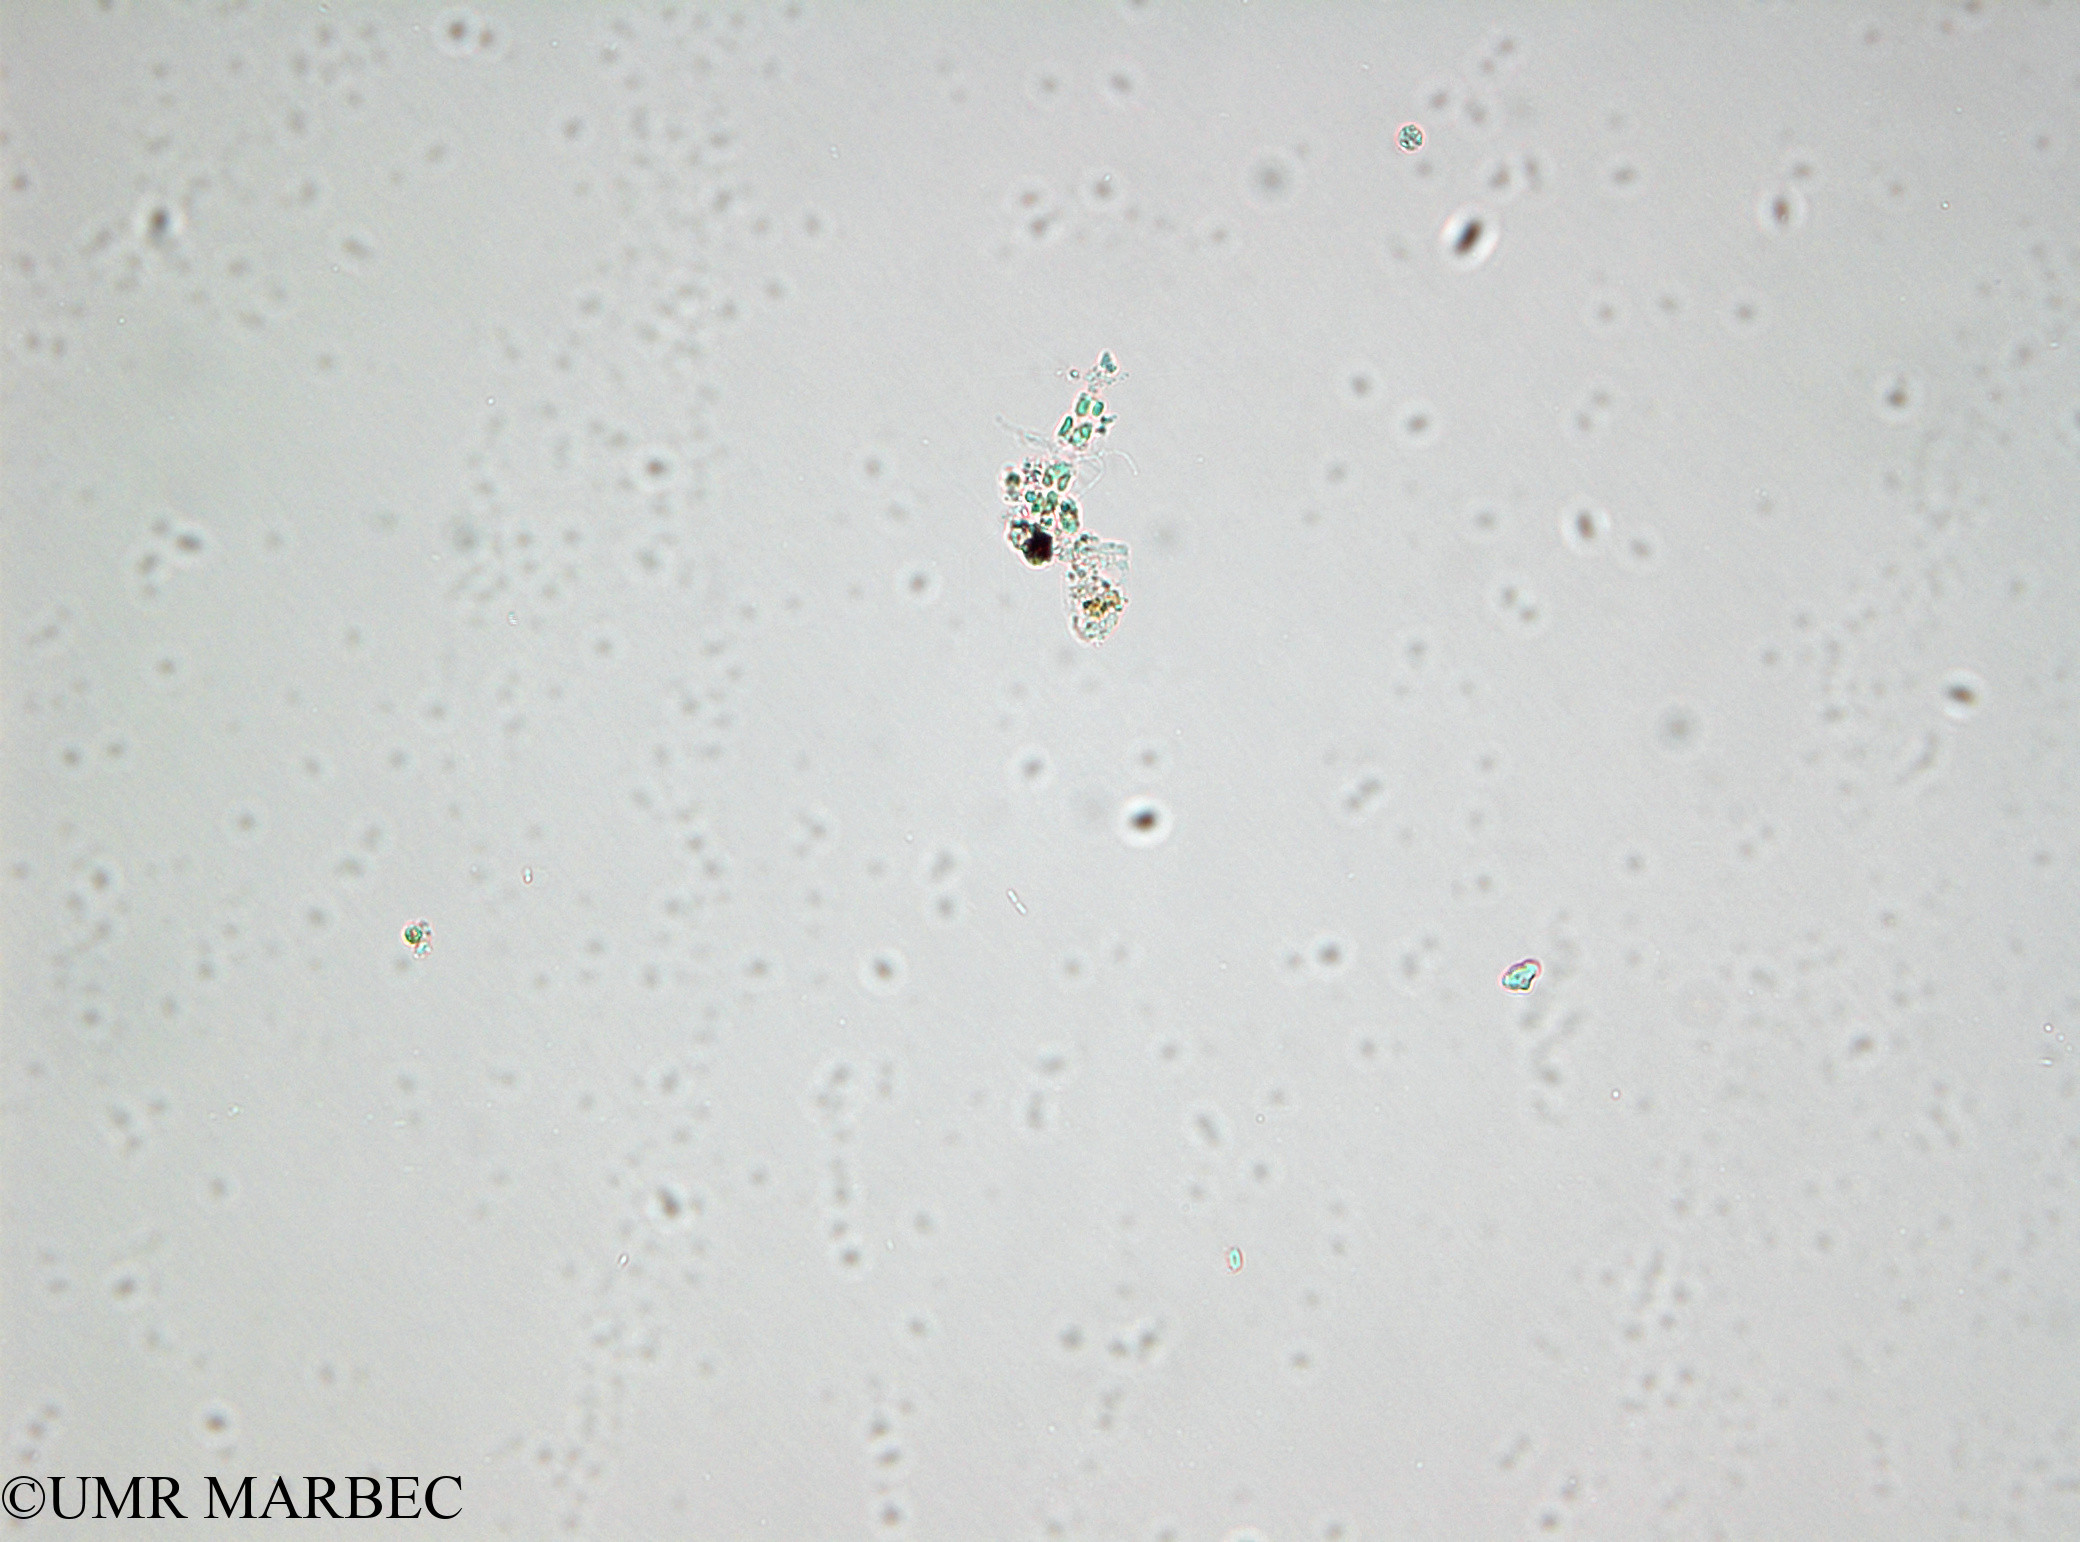 phyto/Bizerte/bizerte_lagoon/RISCO April 2014/Bacteriastrum sp4 (- 140730_003).TIF(copy).jpg